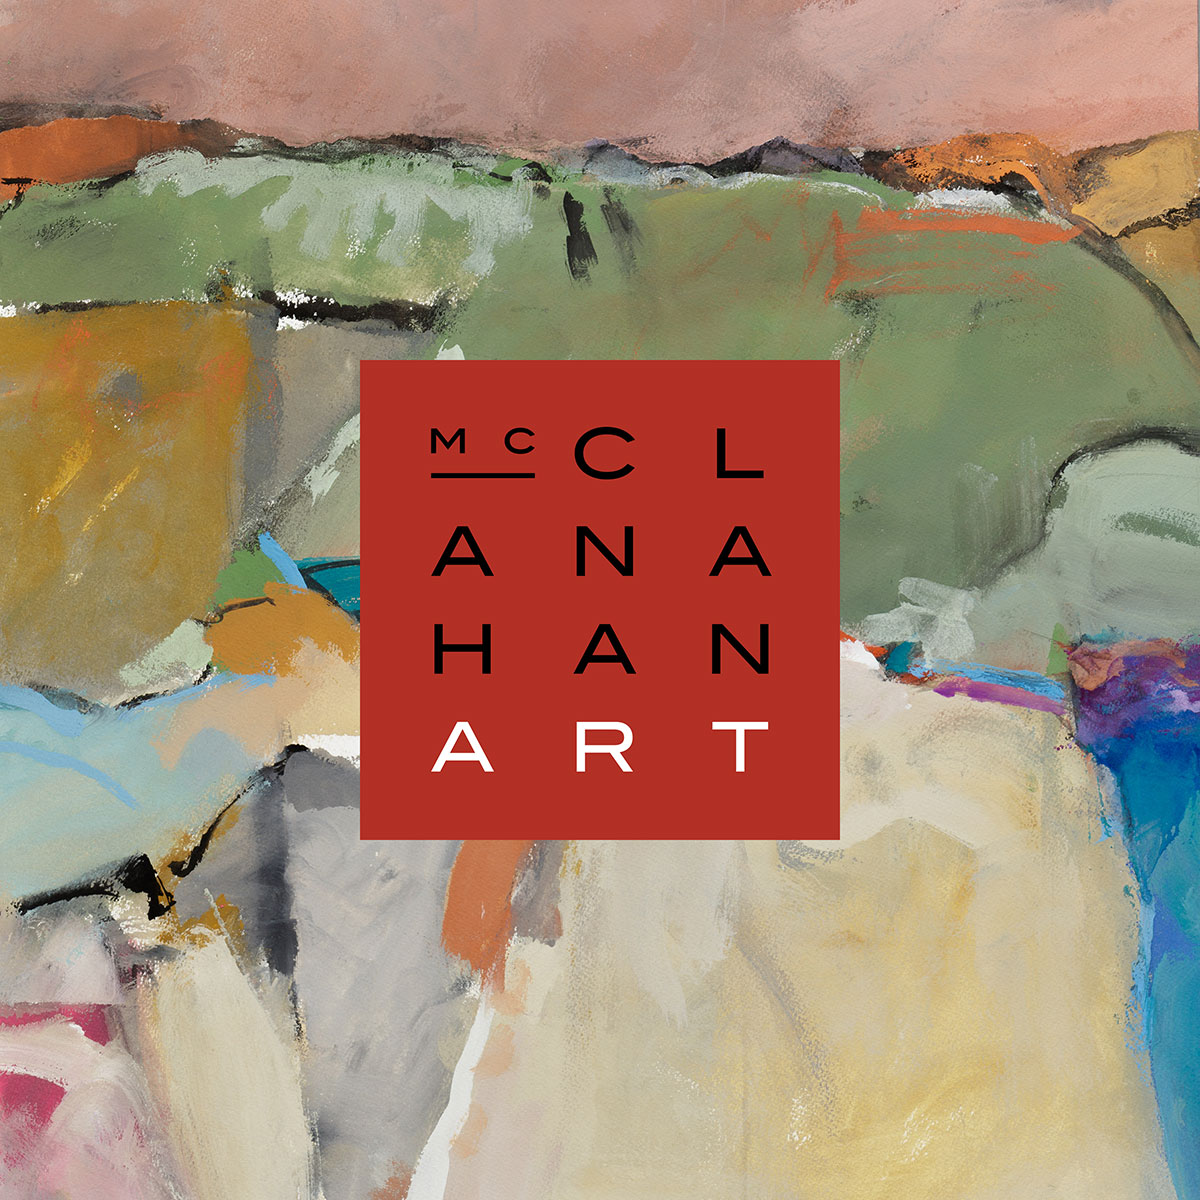 McClanahan Art